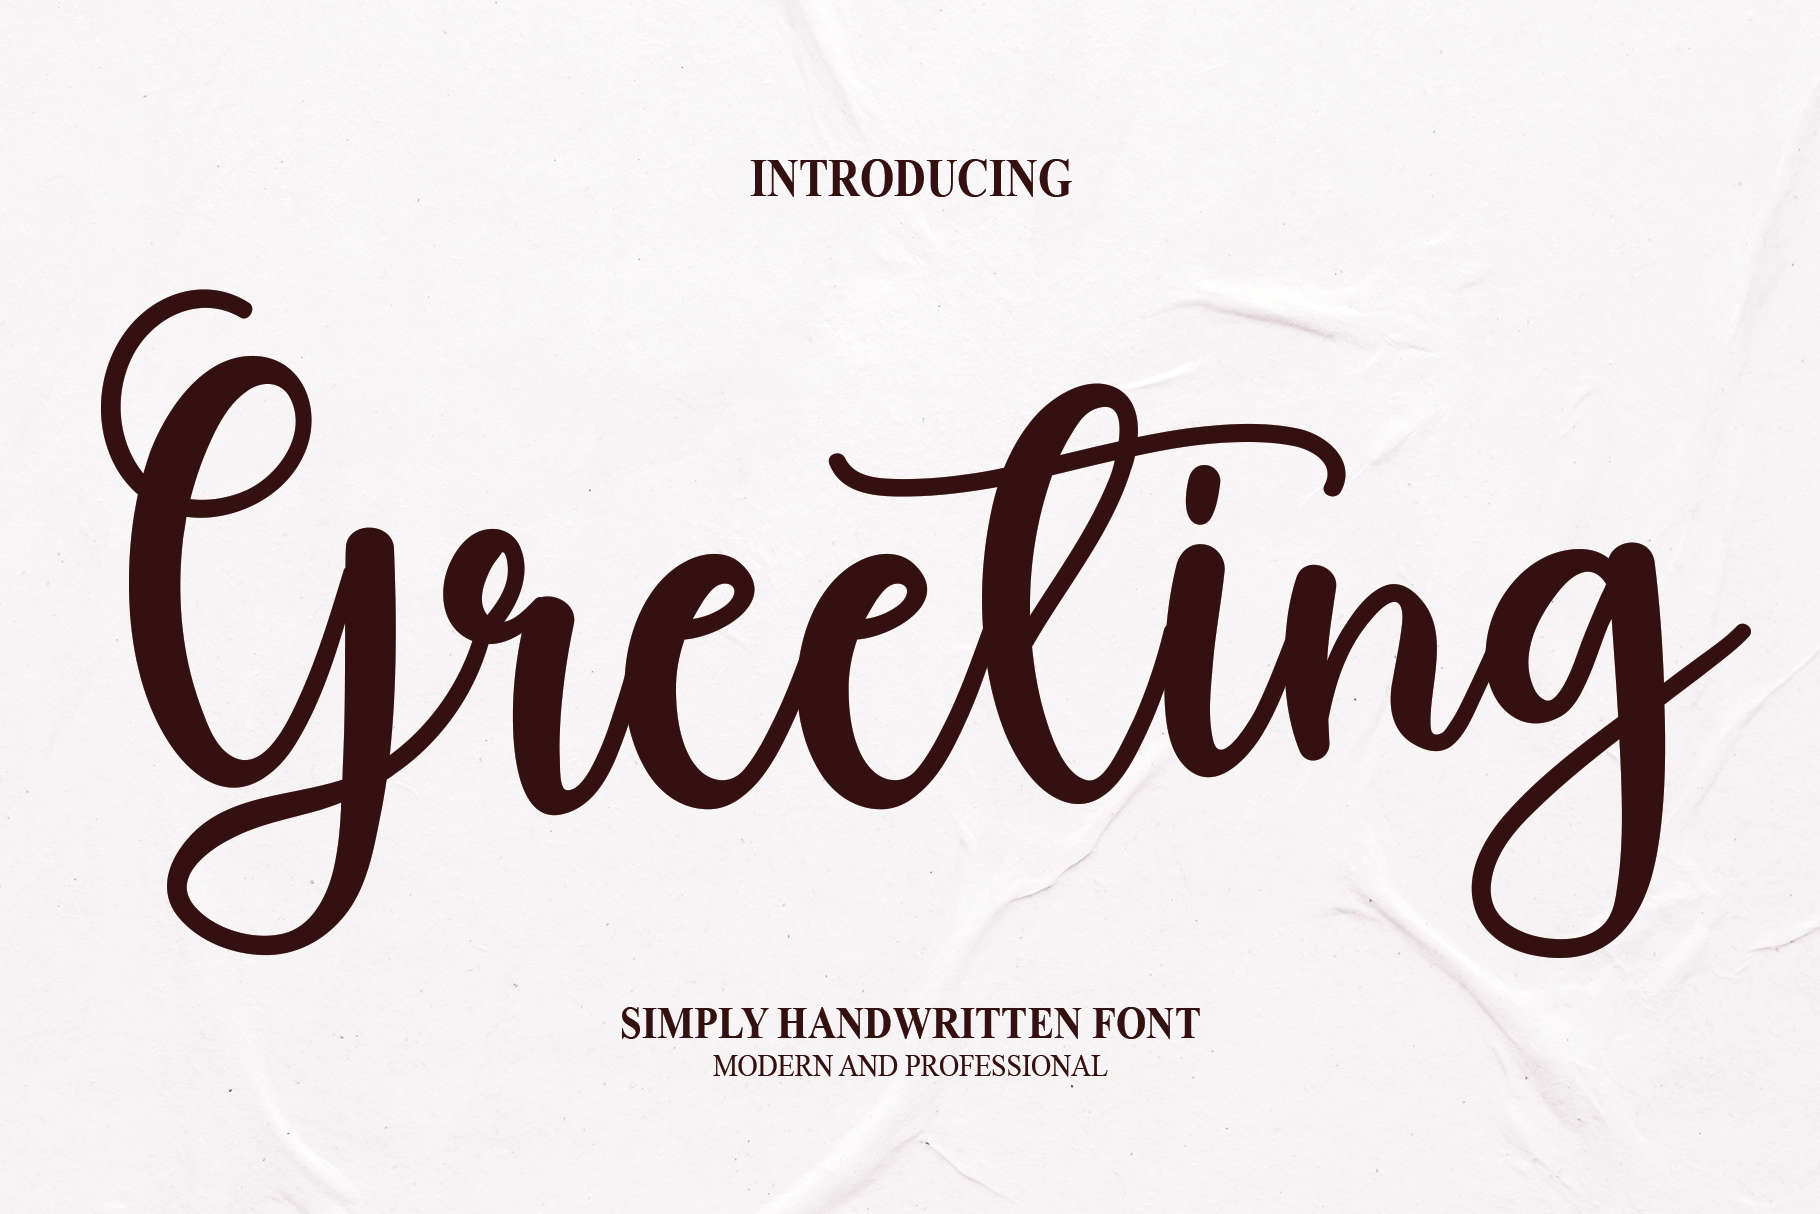 Greeting Script Font